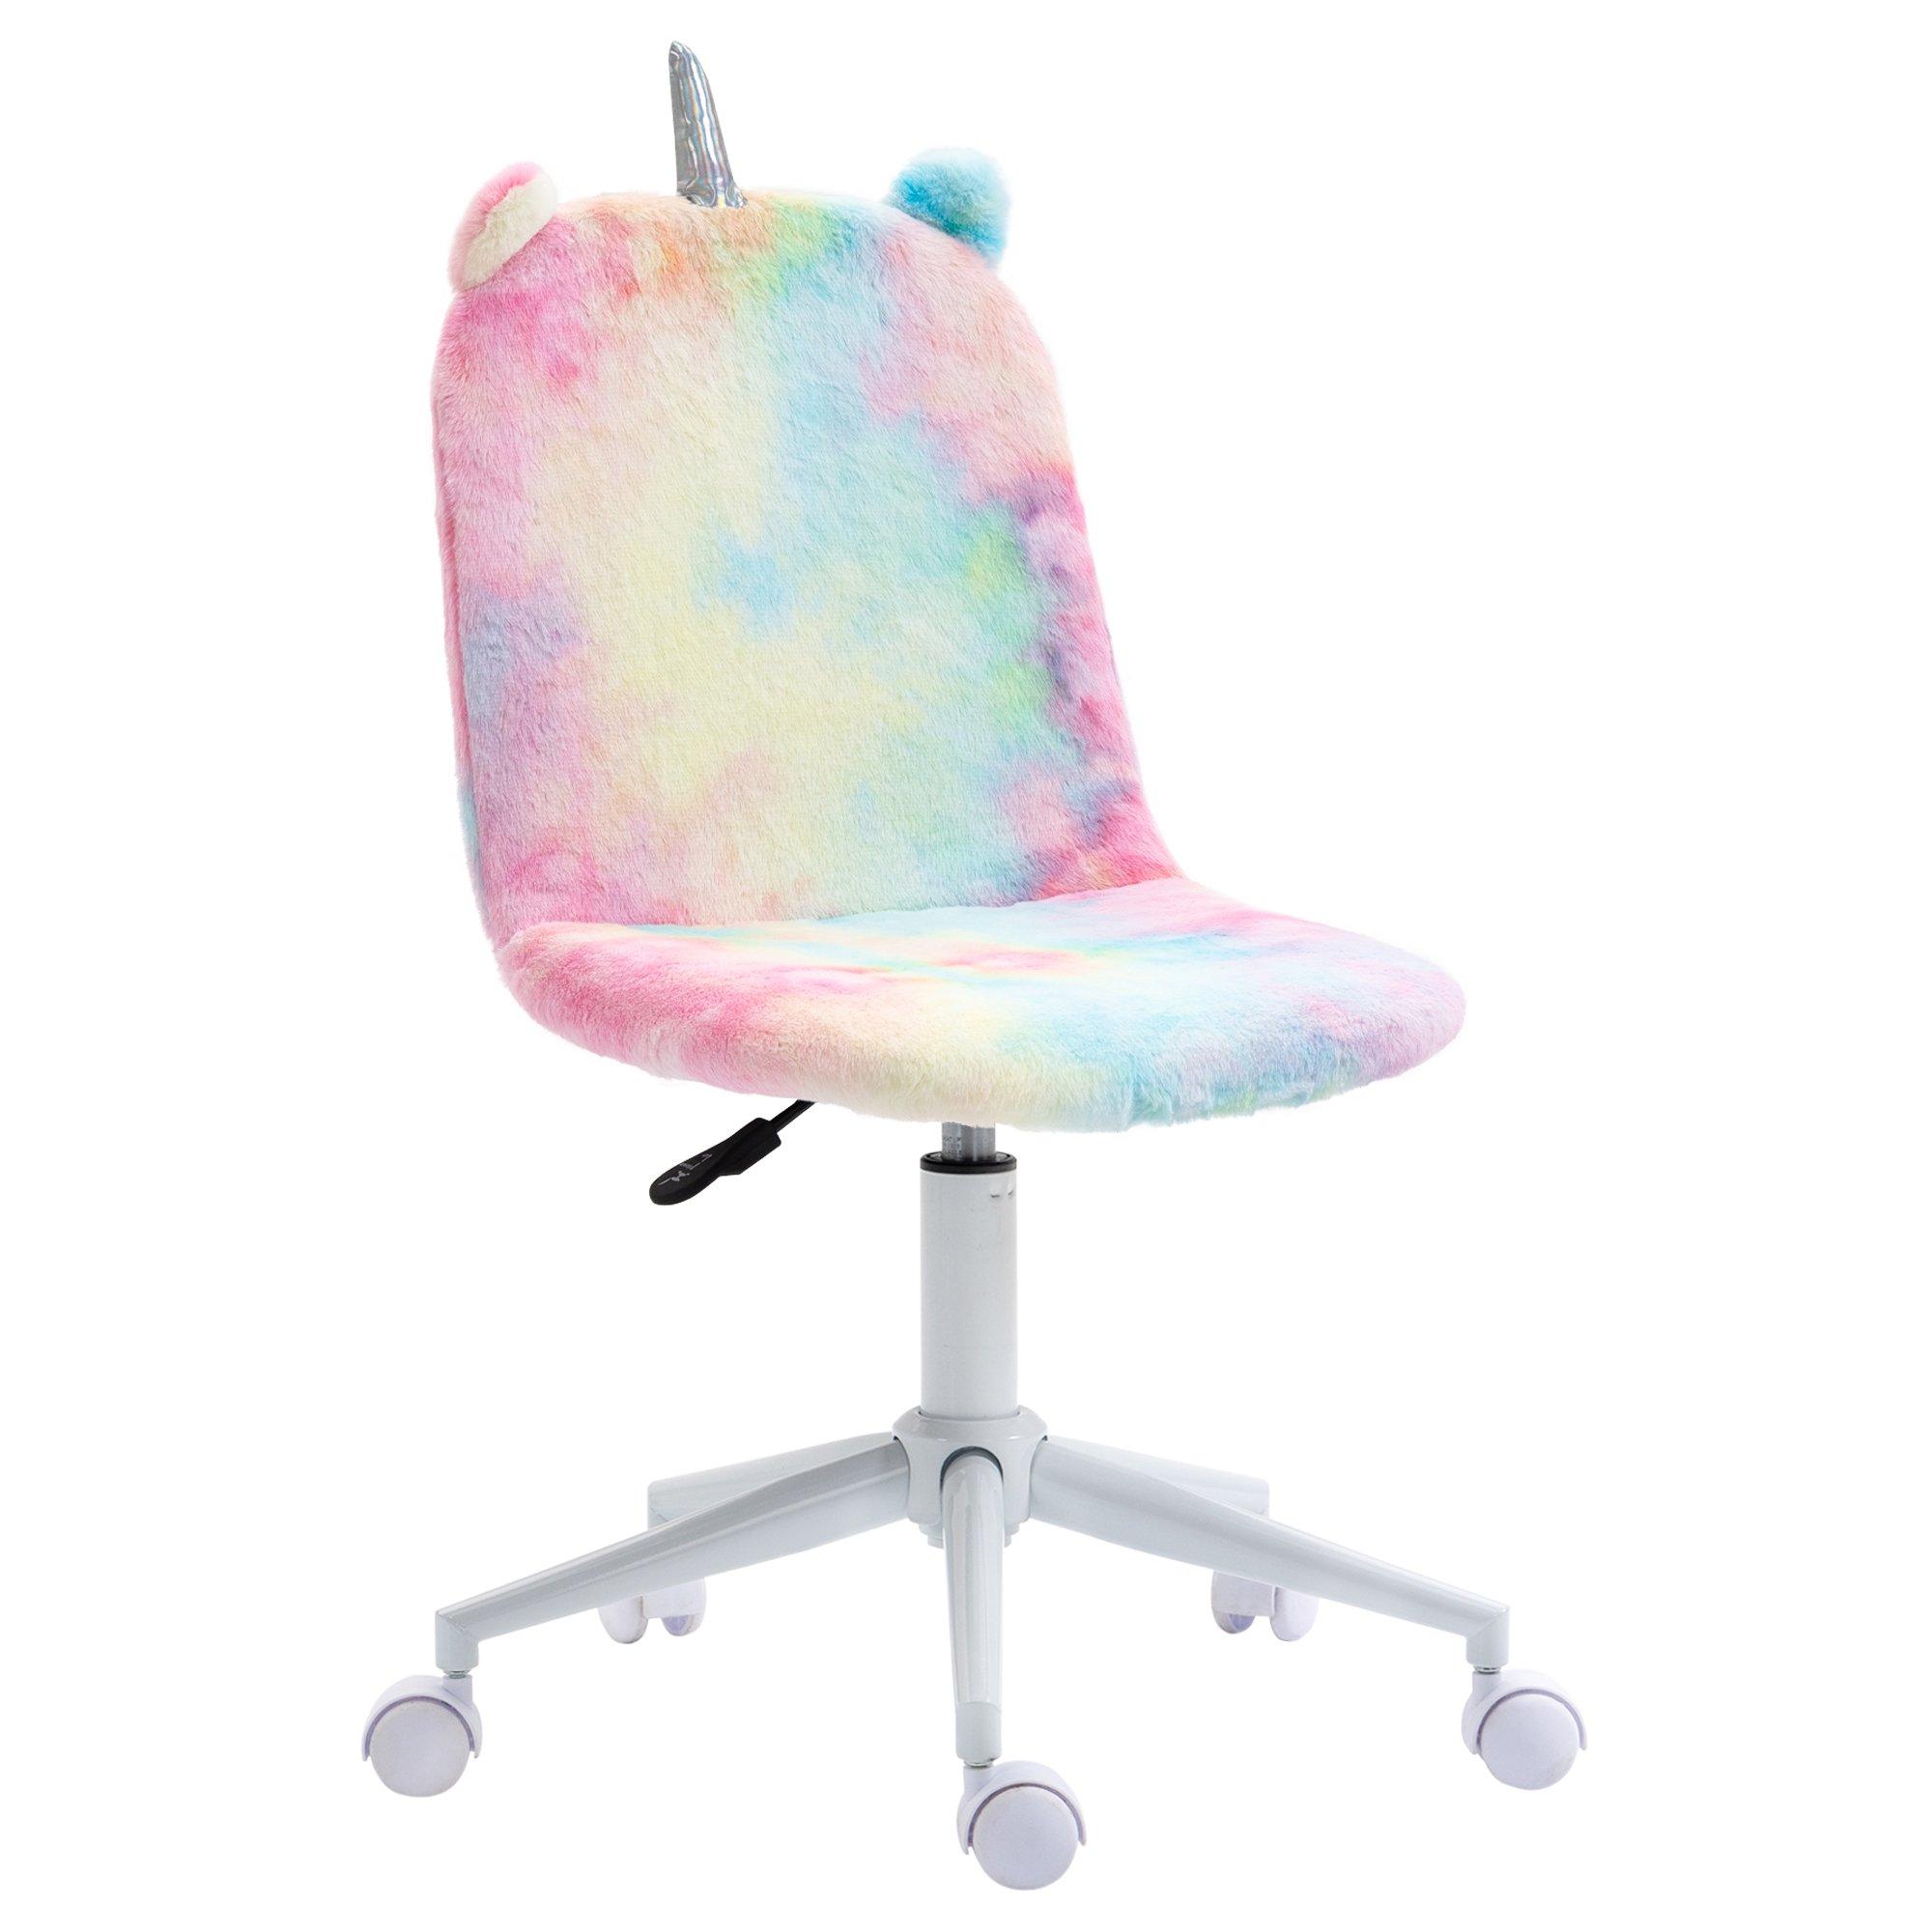 Fluffy Unicorn Office Chair with Swivel Wheel, Cute Desk Chair